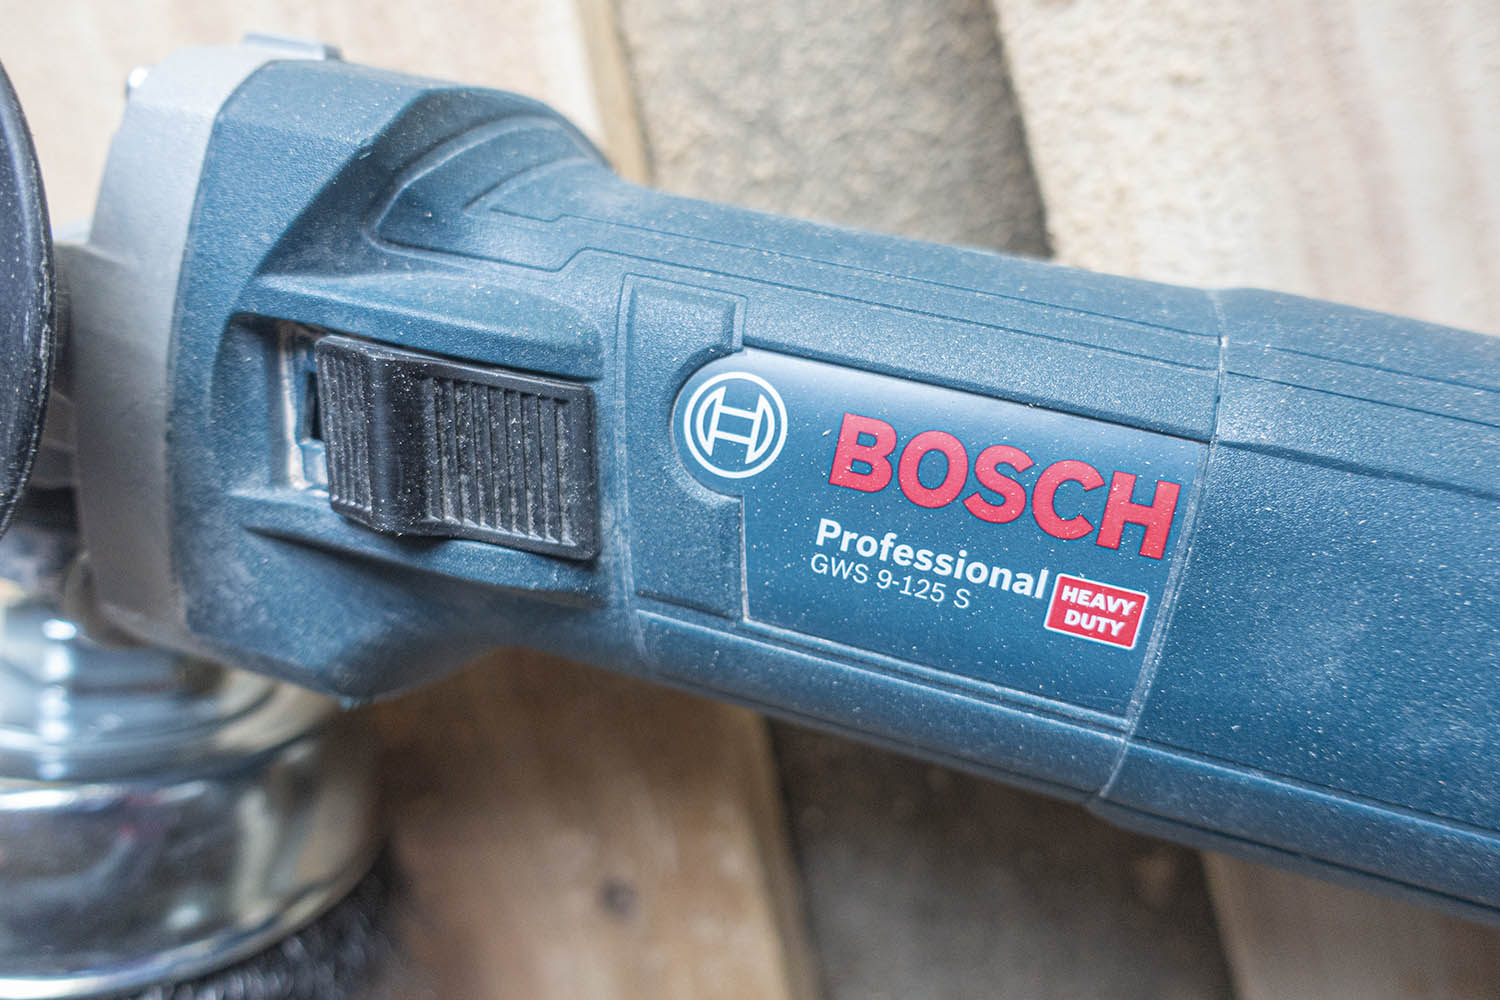 GWS 9-125 S Bosch review amazon